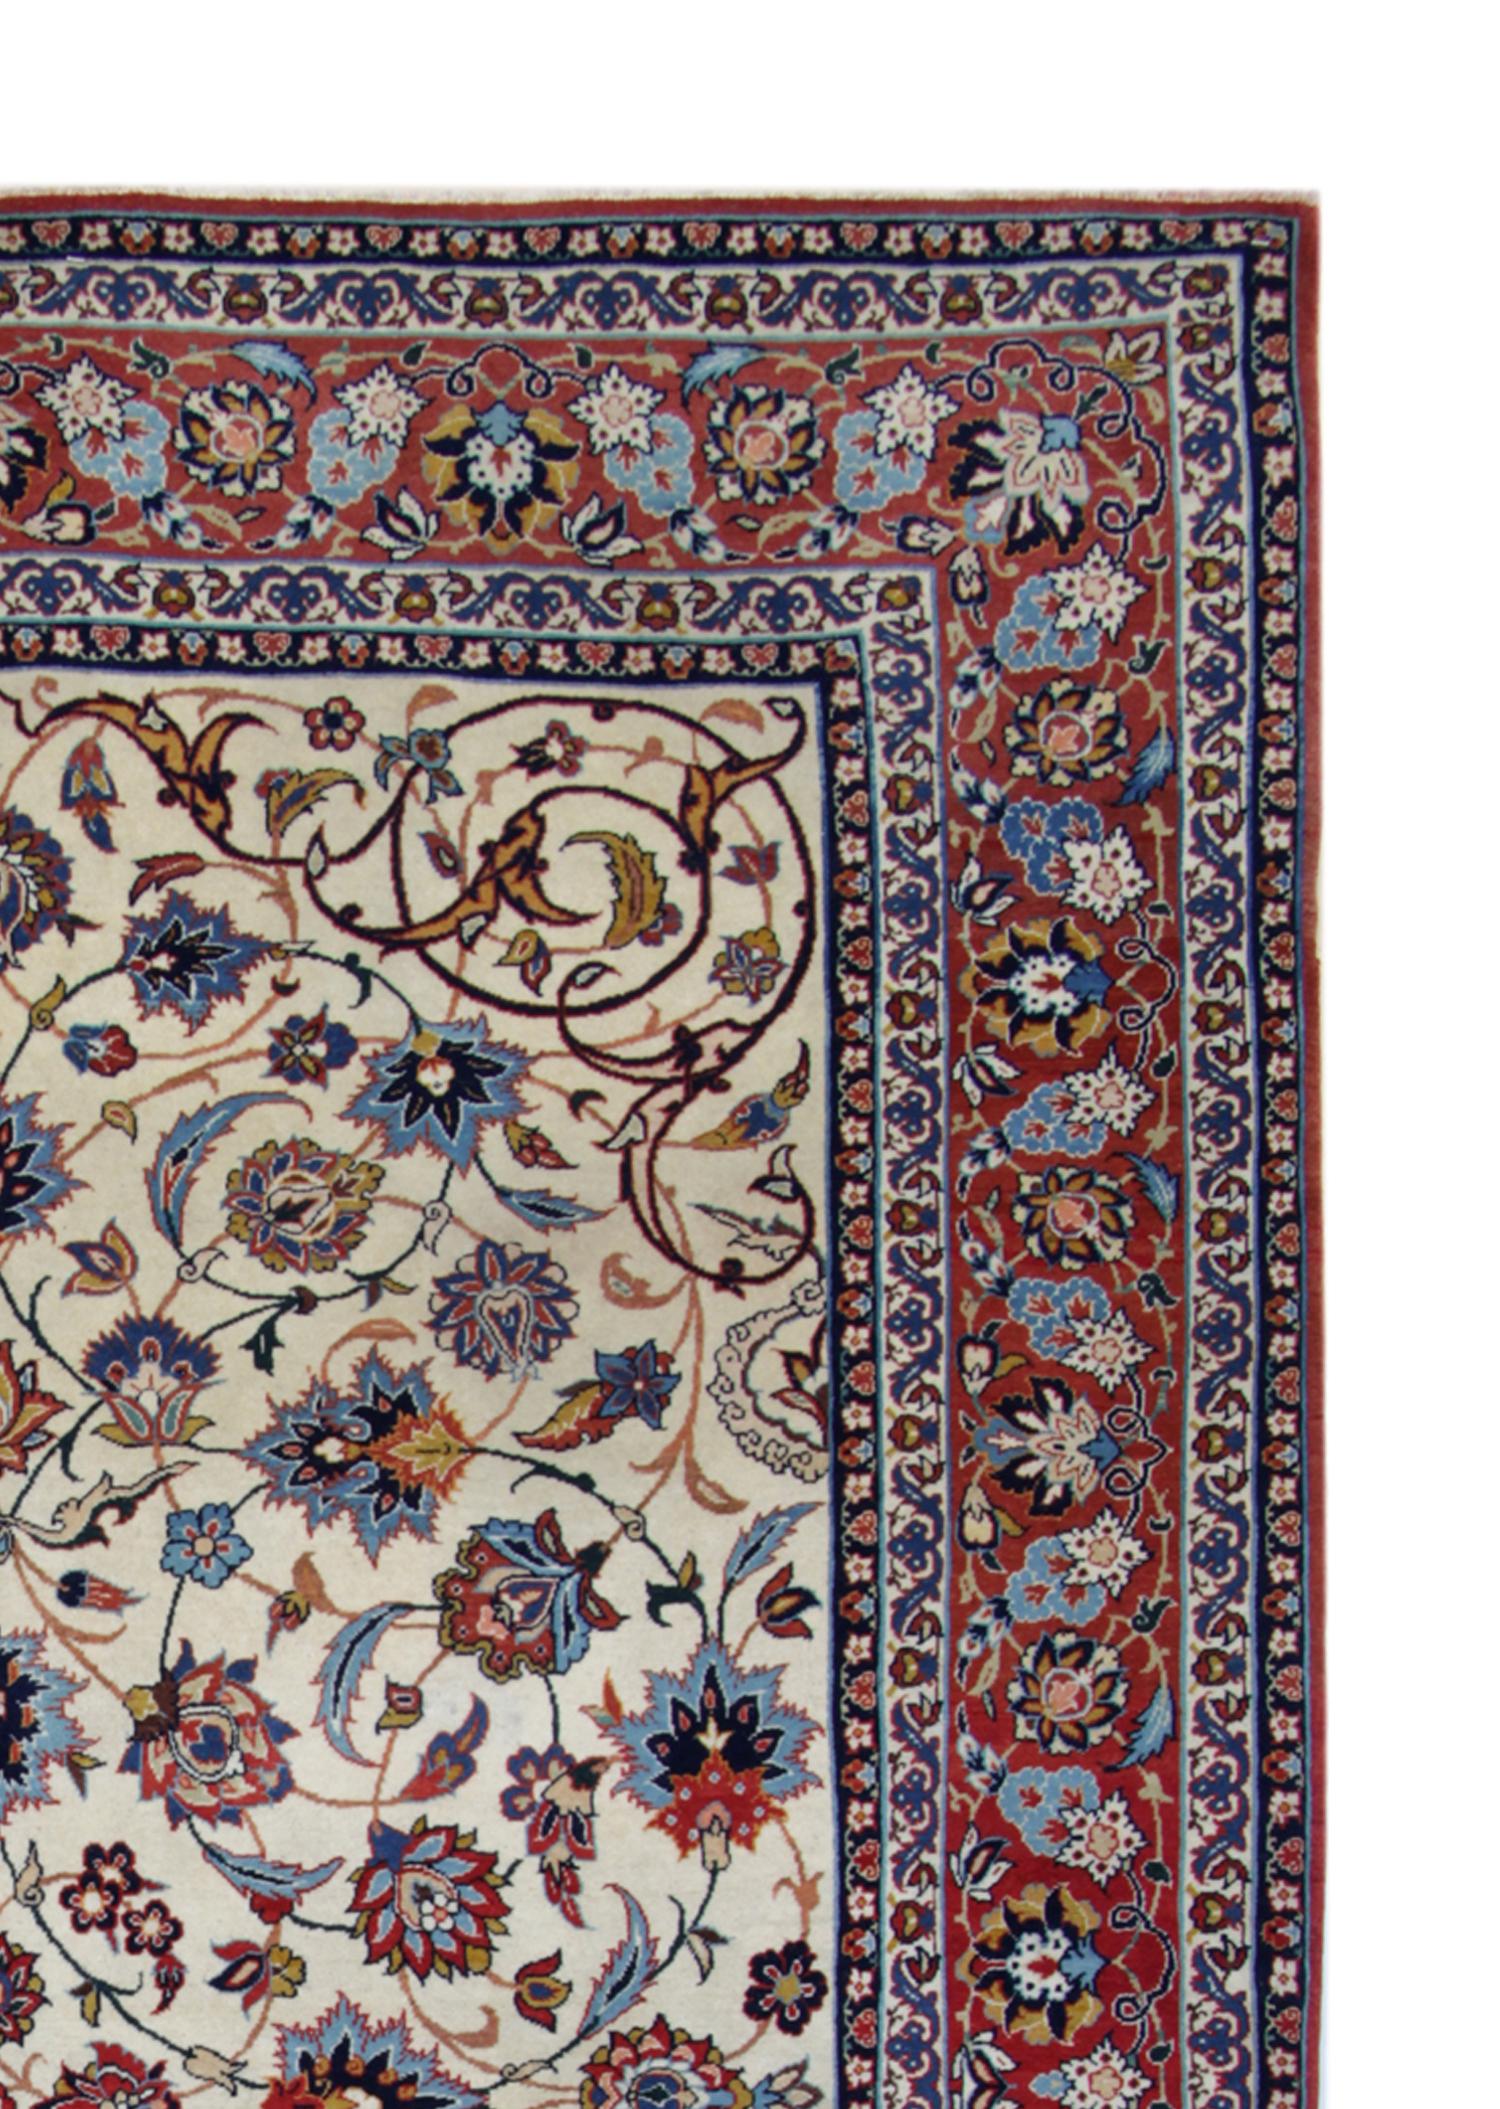 Turkish Vintage Rugs Floral Kurk Handwoven Oriental Blue Red Cream Carpet Rug 206x139cm  For Sale